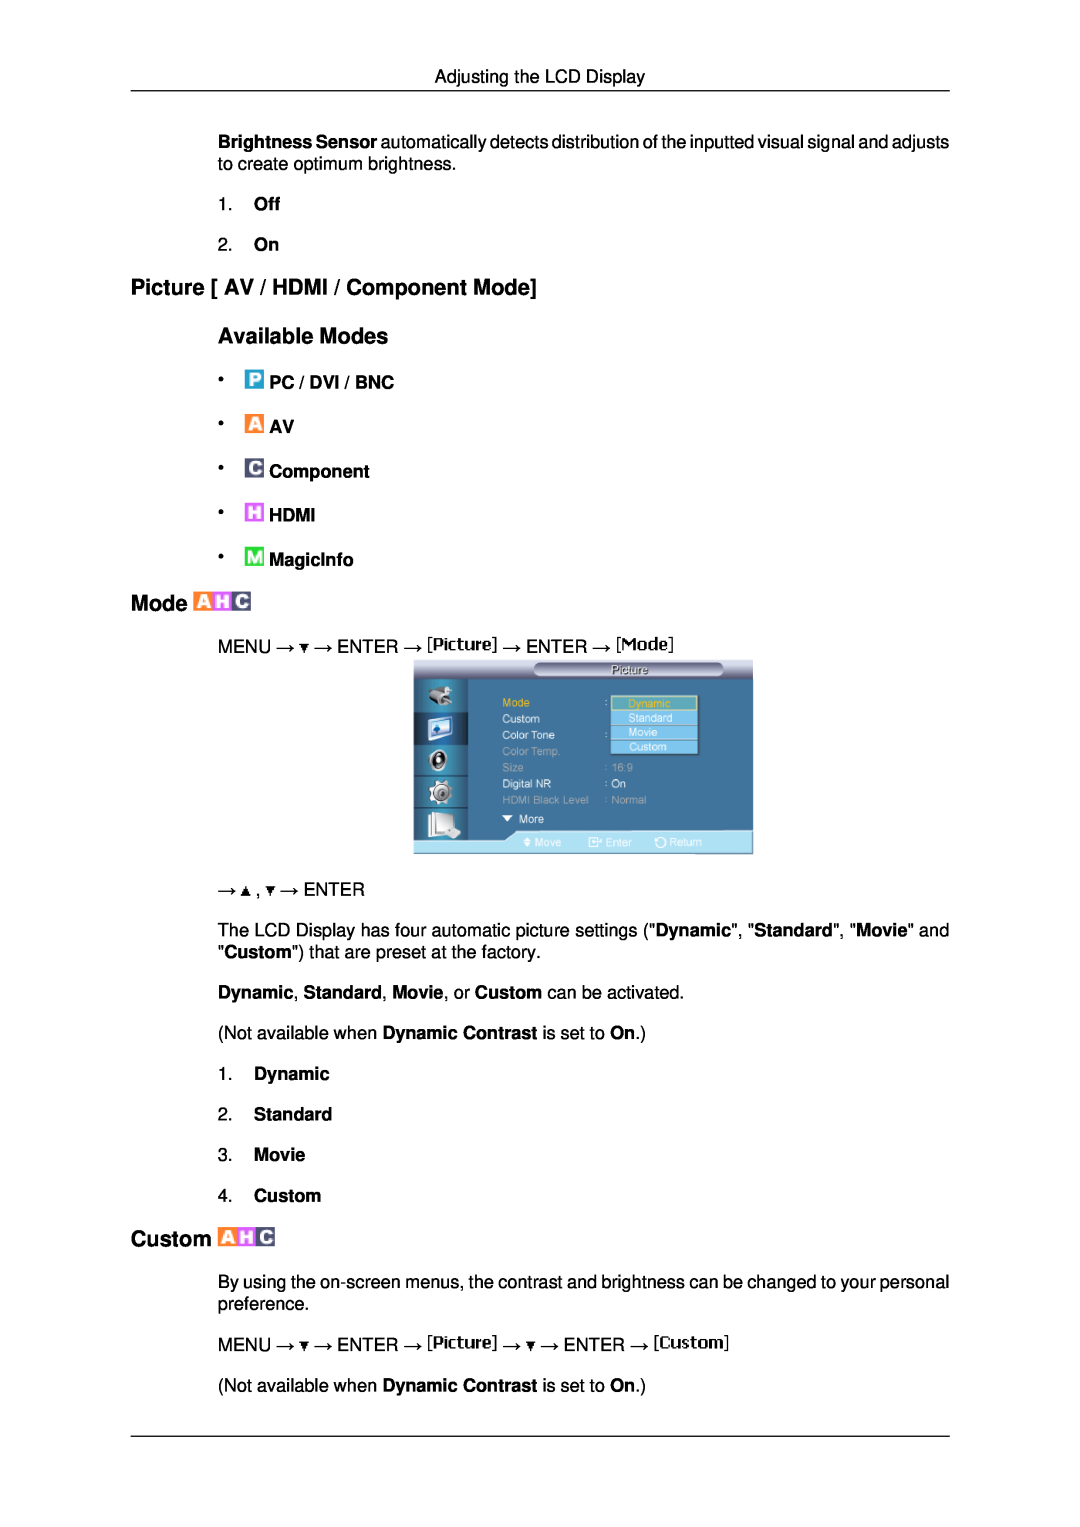 Samsung LH82BVTLBF/EN manual Picture AV / HDMI / Component Mode Available Modes, Dynamic 2. Standard 3. Movie 4. Custom 